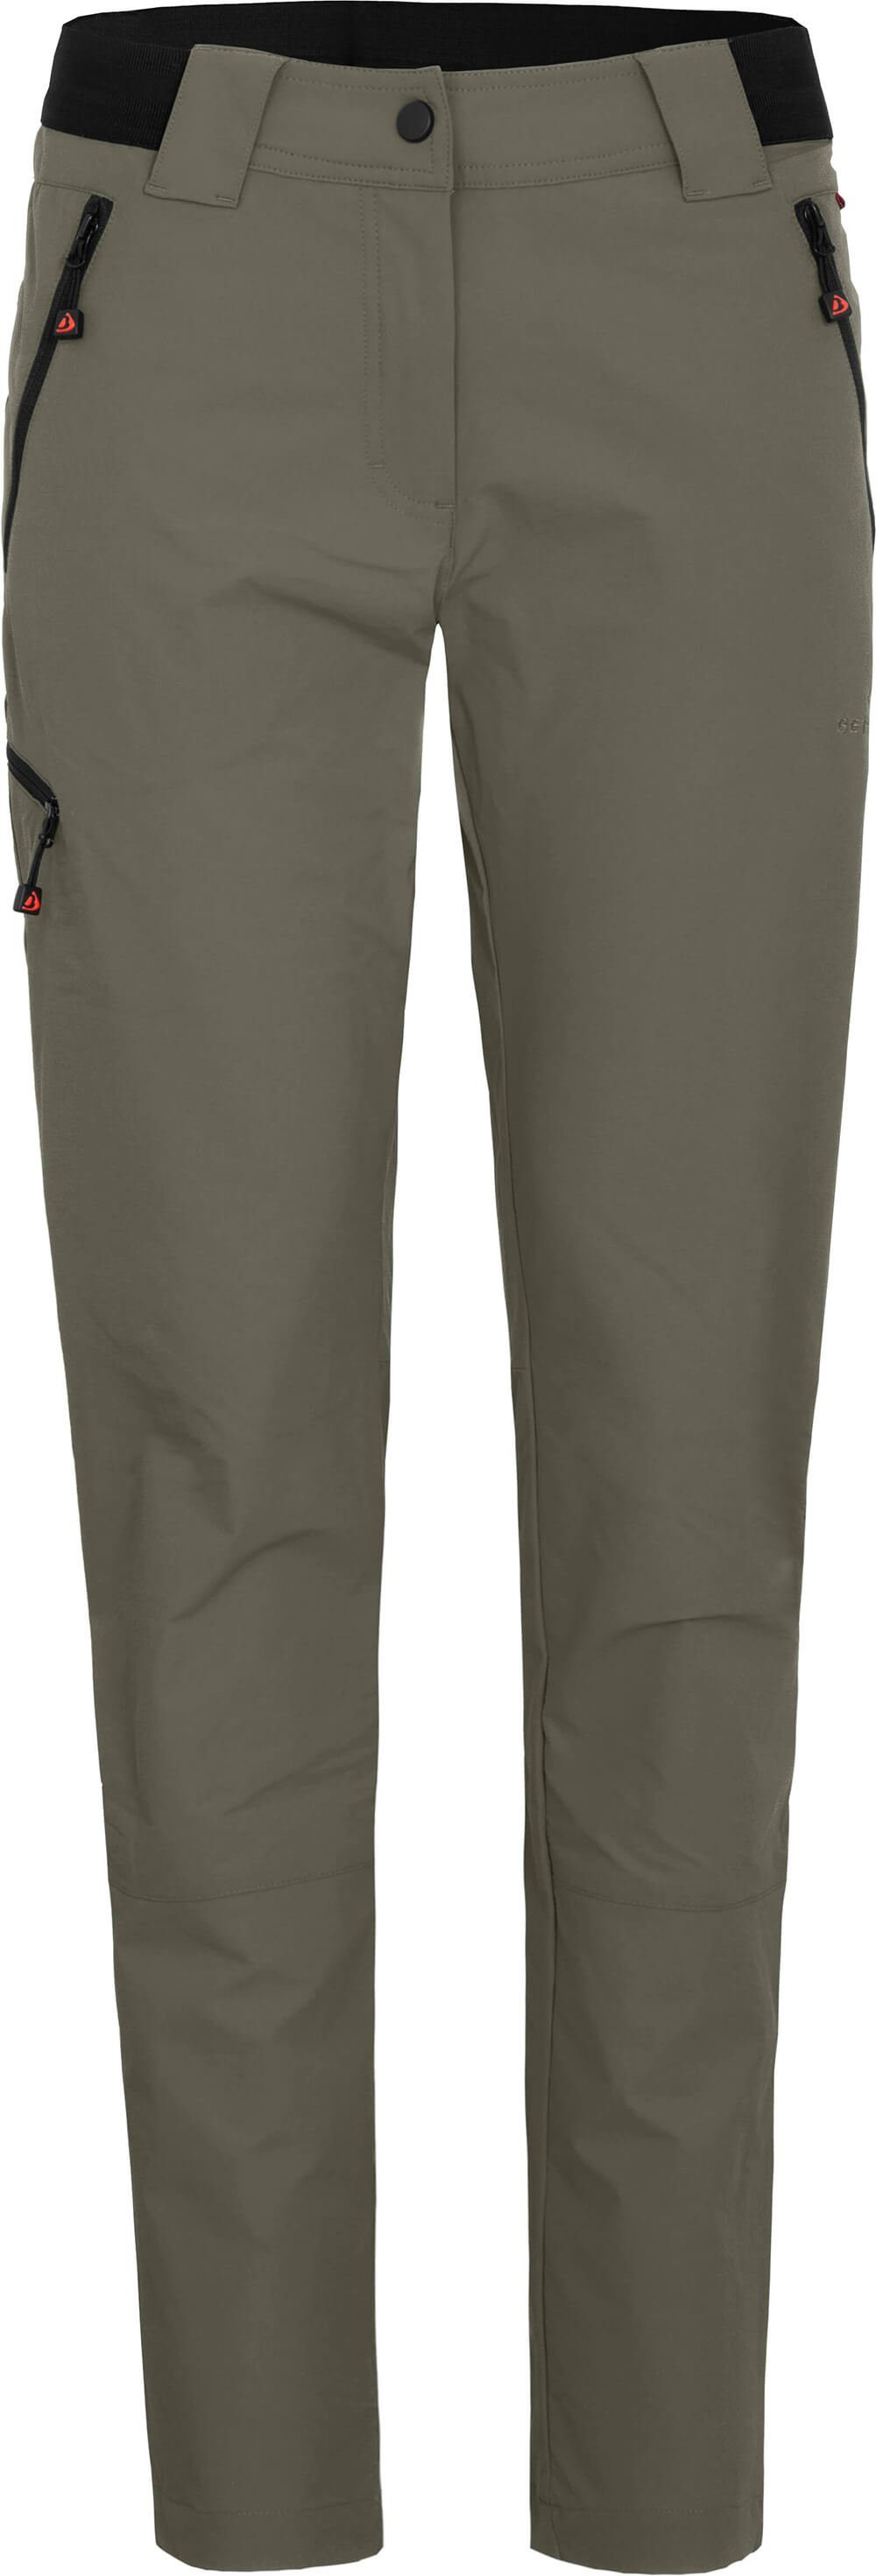 Bergson Outdoorhose VIDAA COMFORT (slim) Damen Wanderhose, leicht, strapazierfähig, Normalgrößen, grau/grün